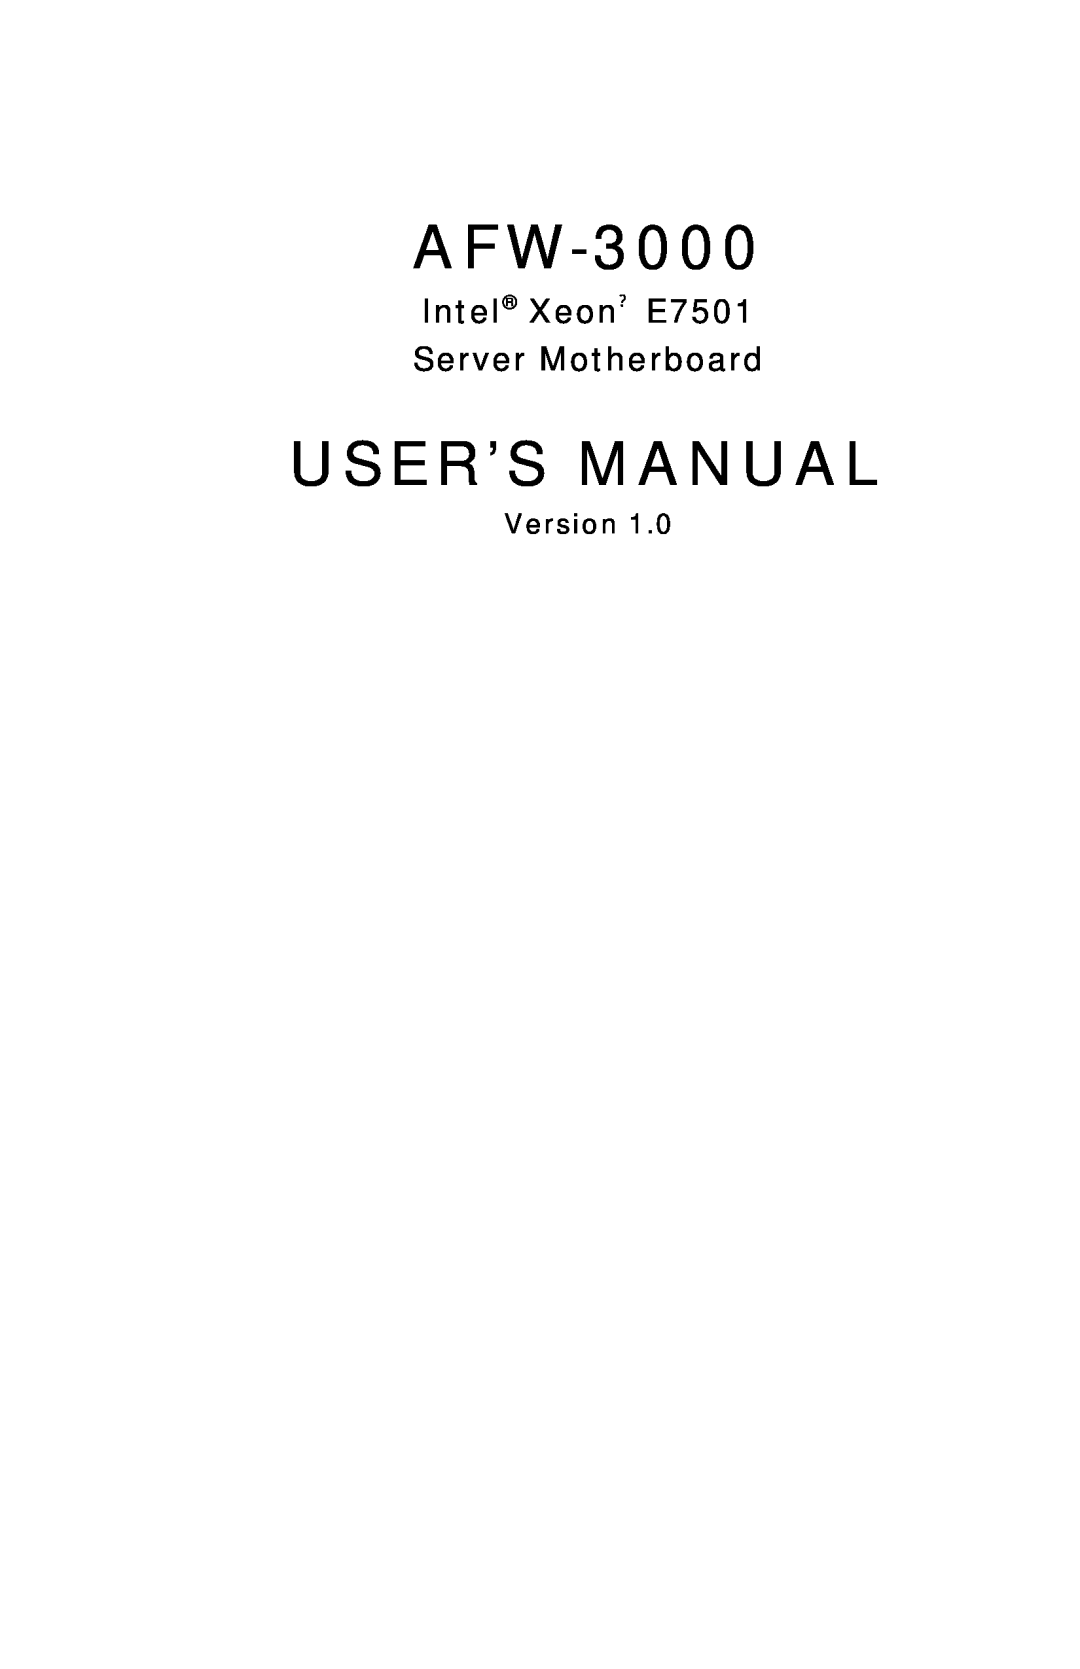 Intel user manual Intel Xeon鬹 E7501 Server Motherboard, Version, AFW-3000, User’S Manual 